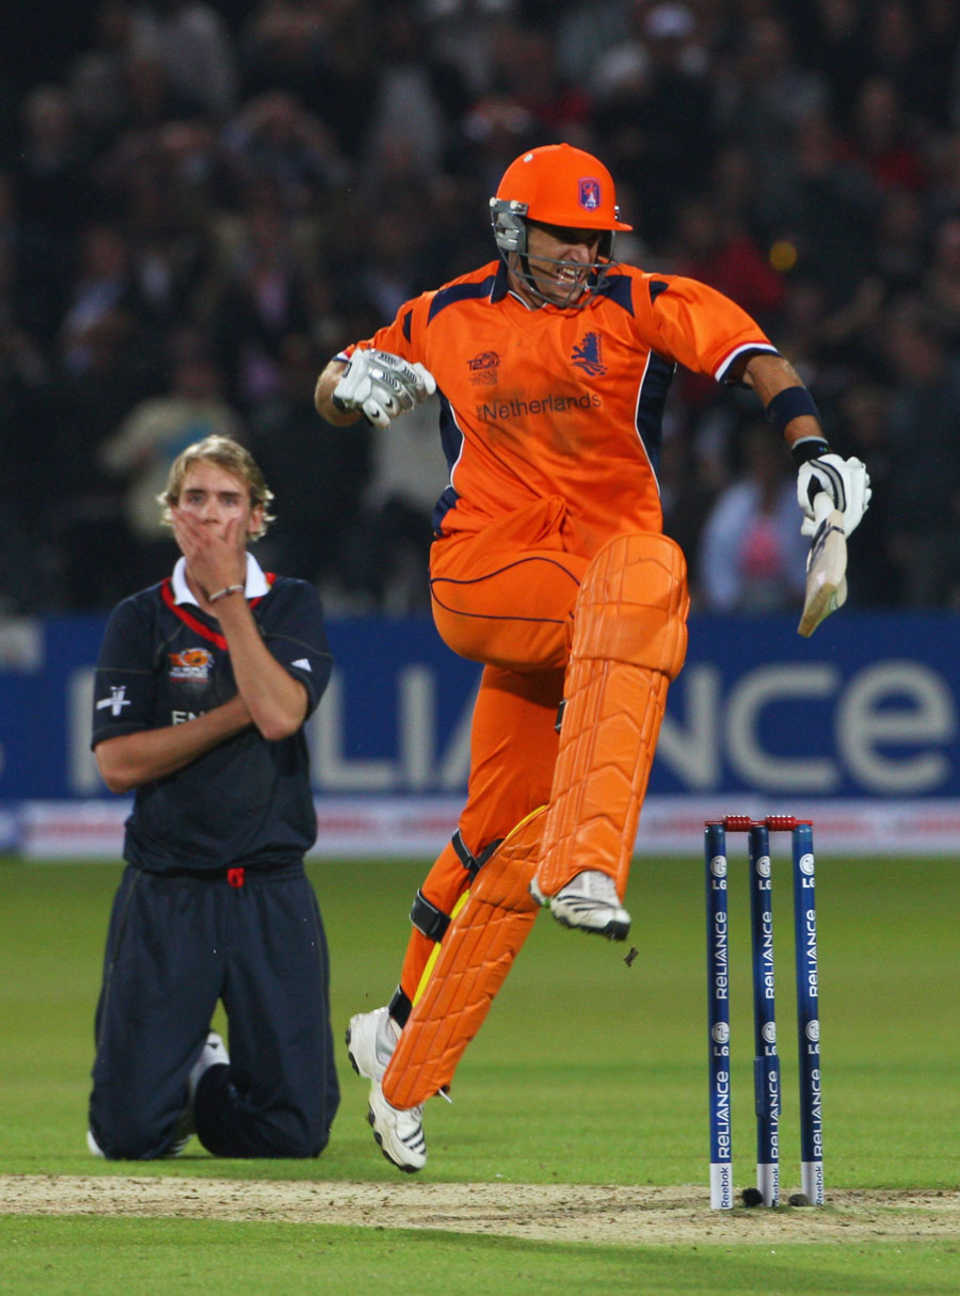 Cricket photo index - England vs Netherlands, ICC World Twenty20, 1st Match, Group B Match photos | ESPNcricinfo.com